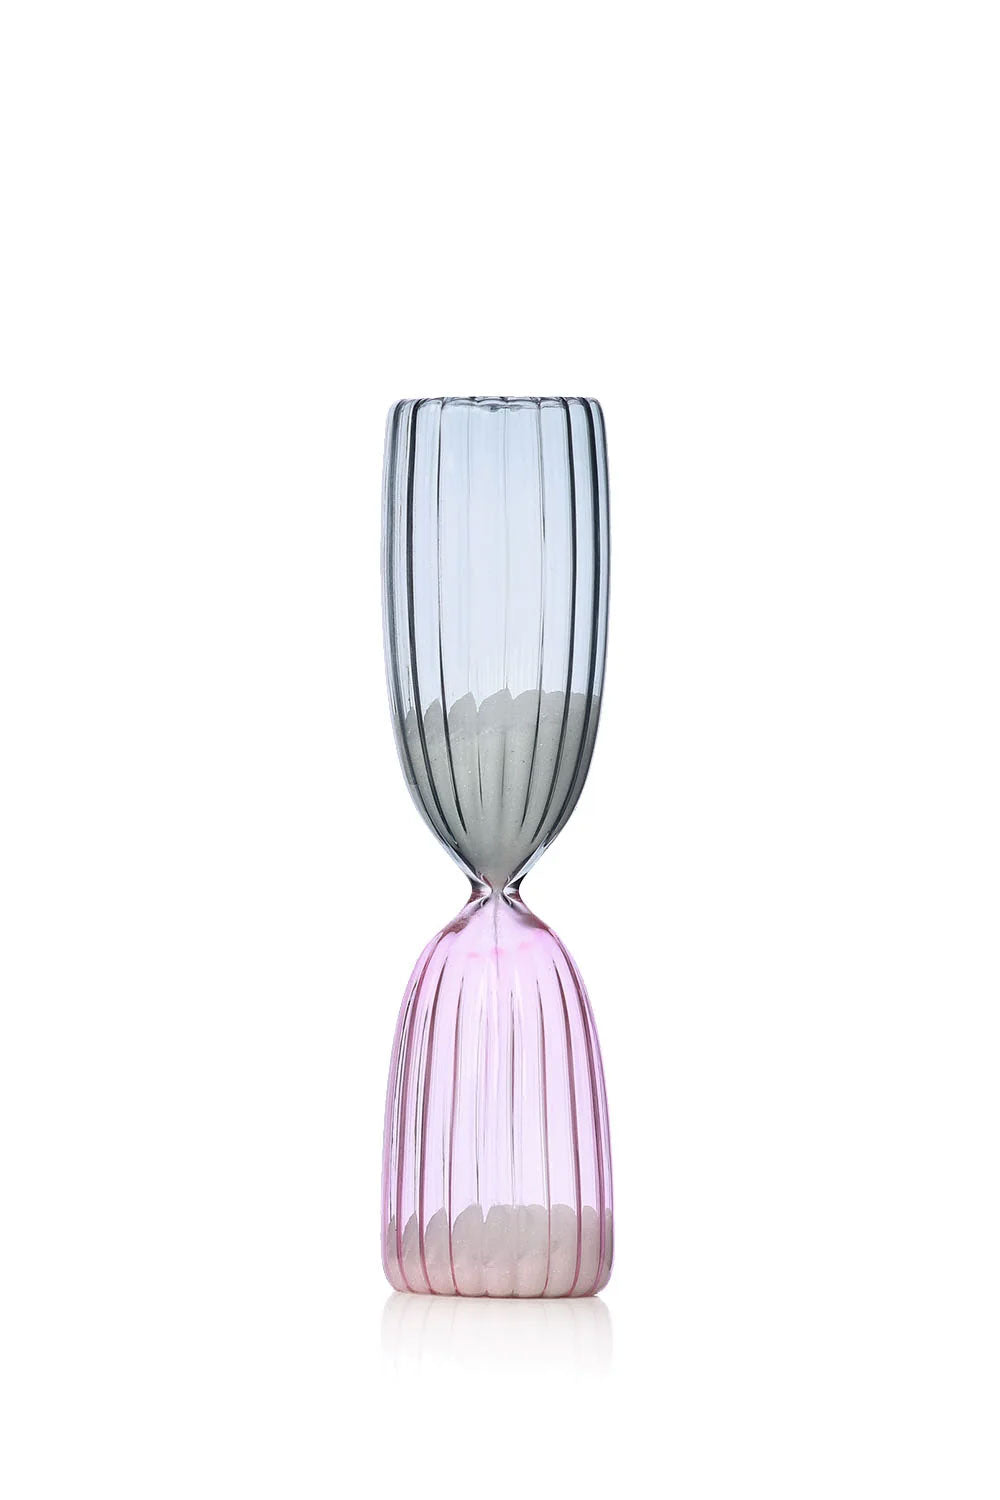 Times Hour Glass, 5 min, Smoke/Pink